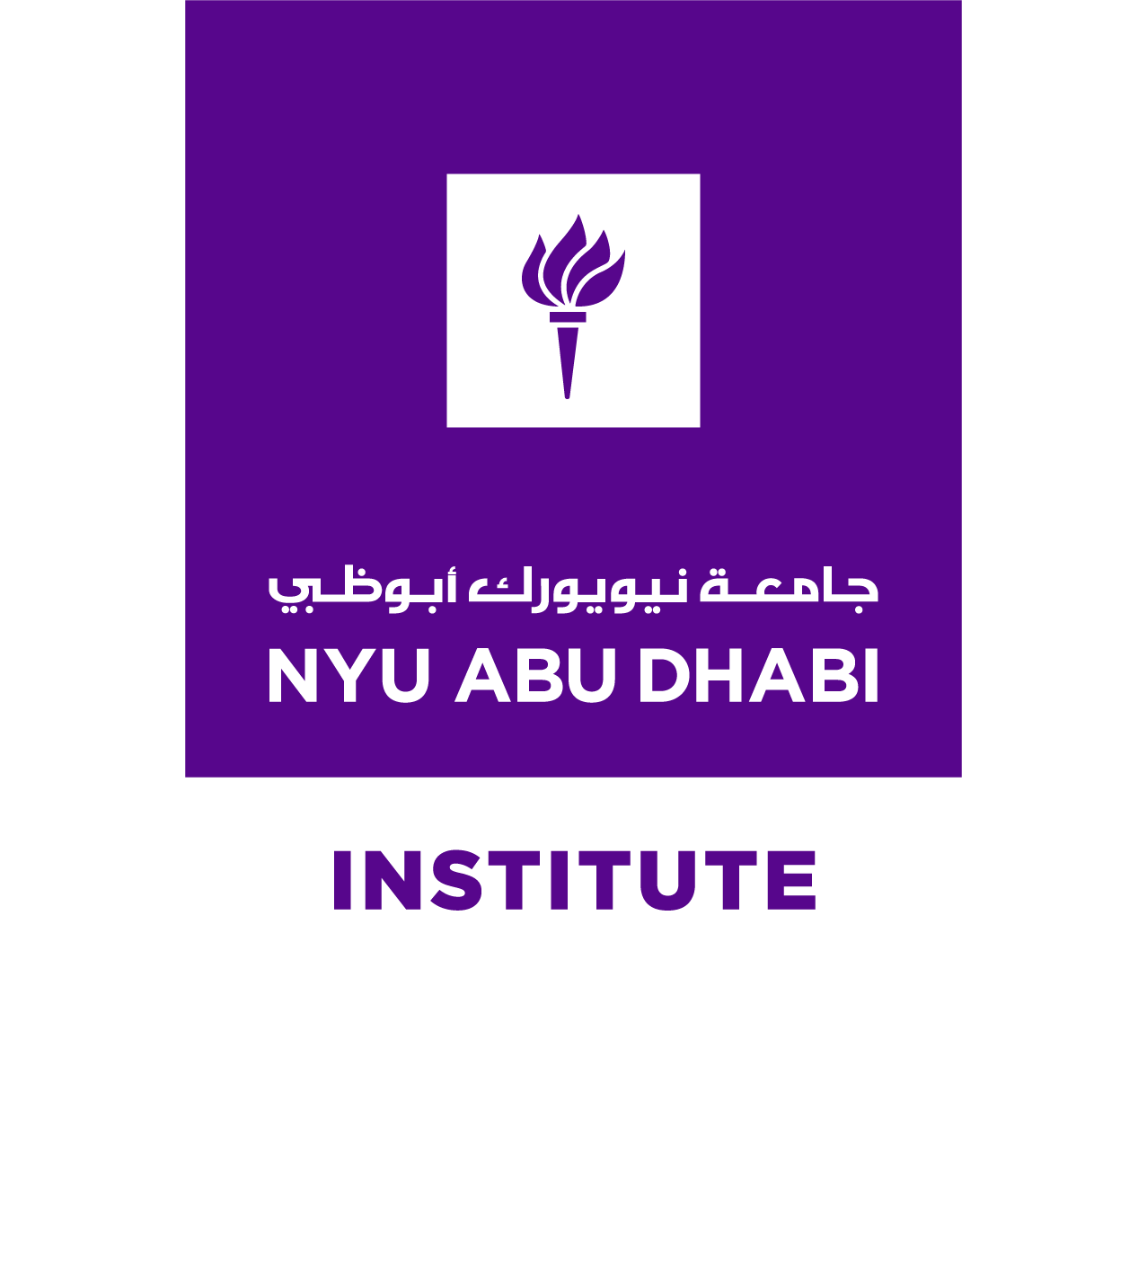 NYU Abu Dhabi Institute